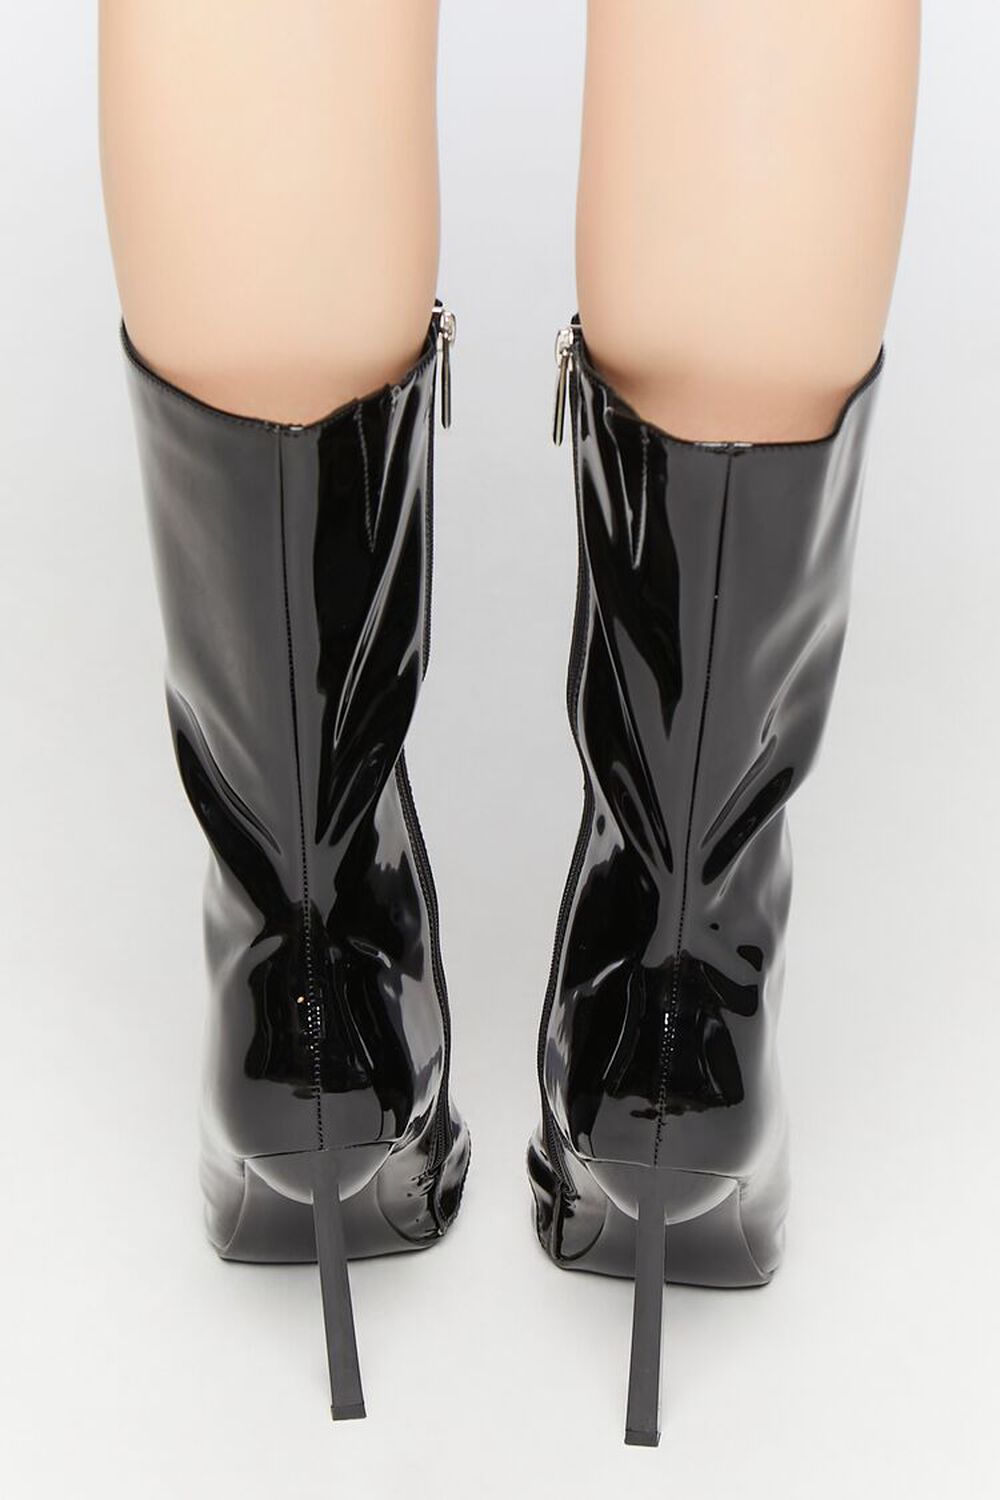 BLACK Faux Patent Leather Stiletto Boots, image 3